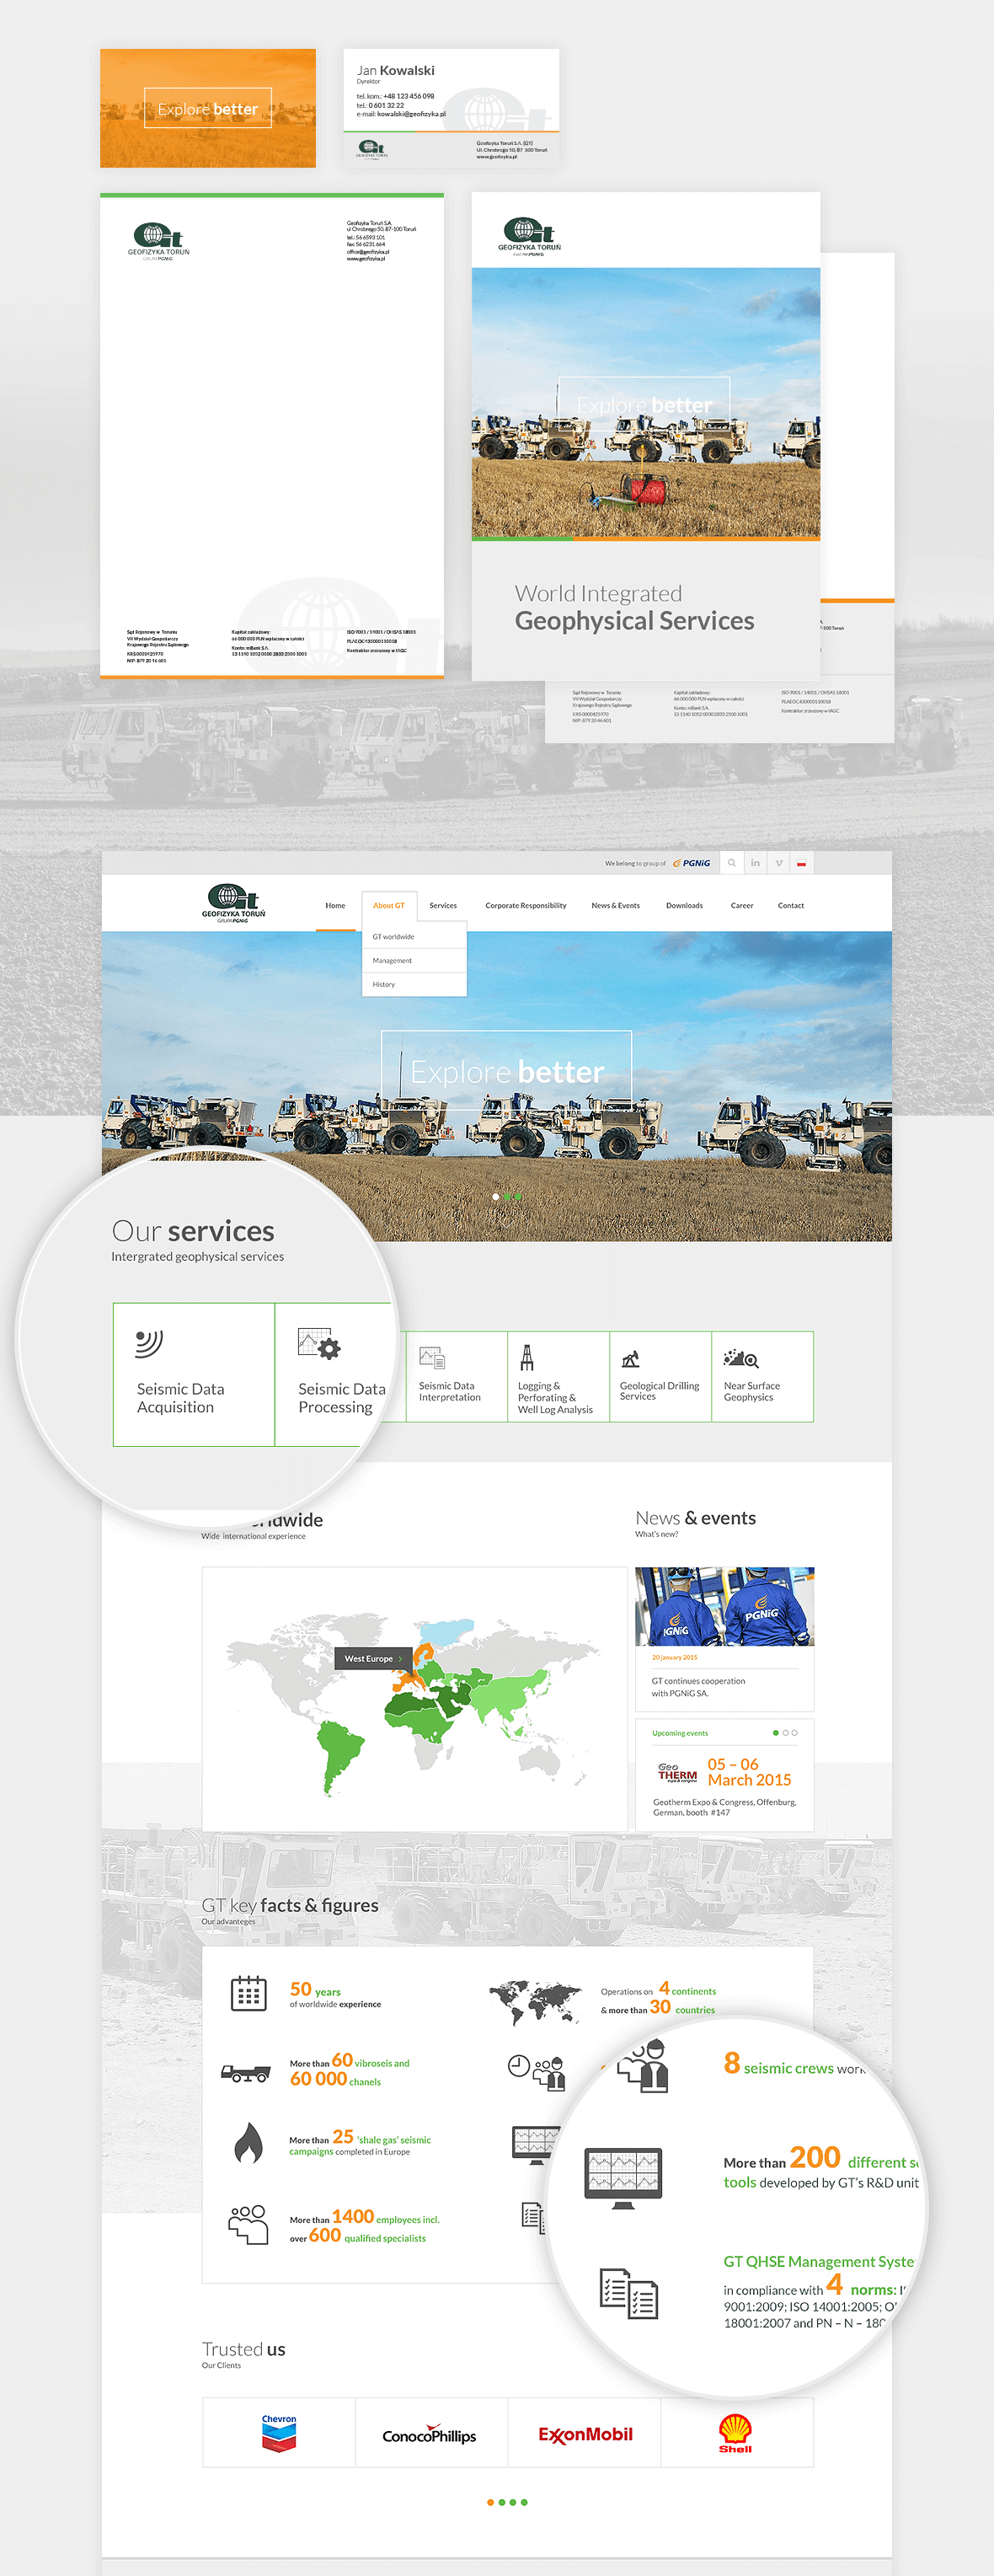 A modern corporate website